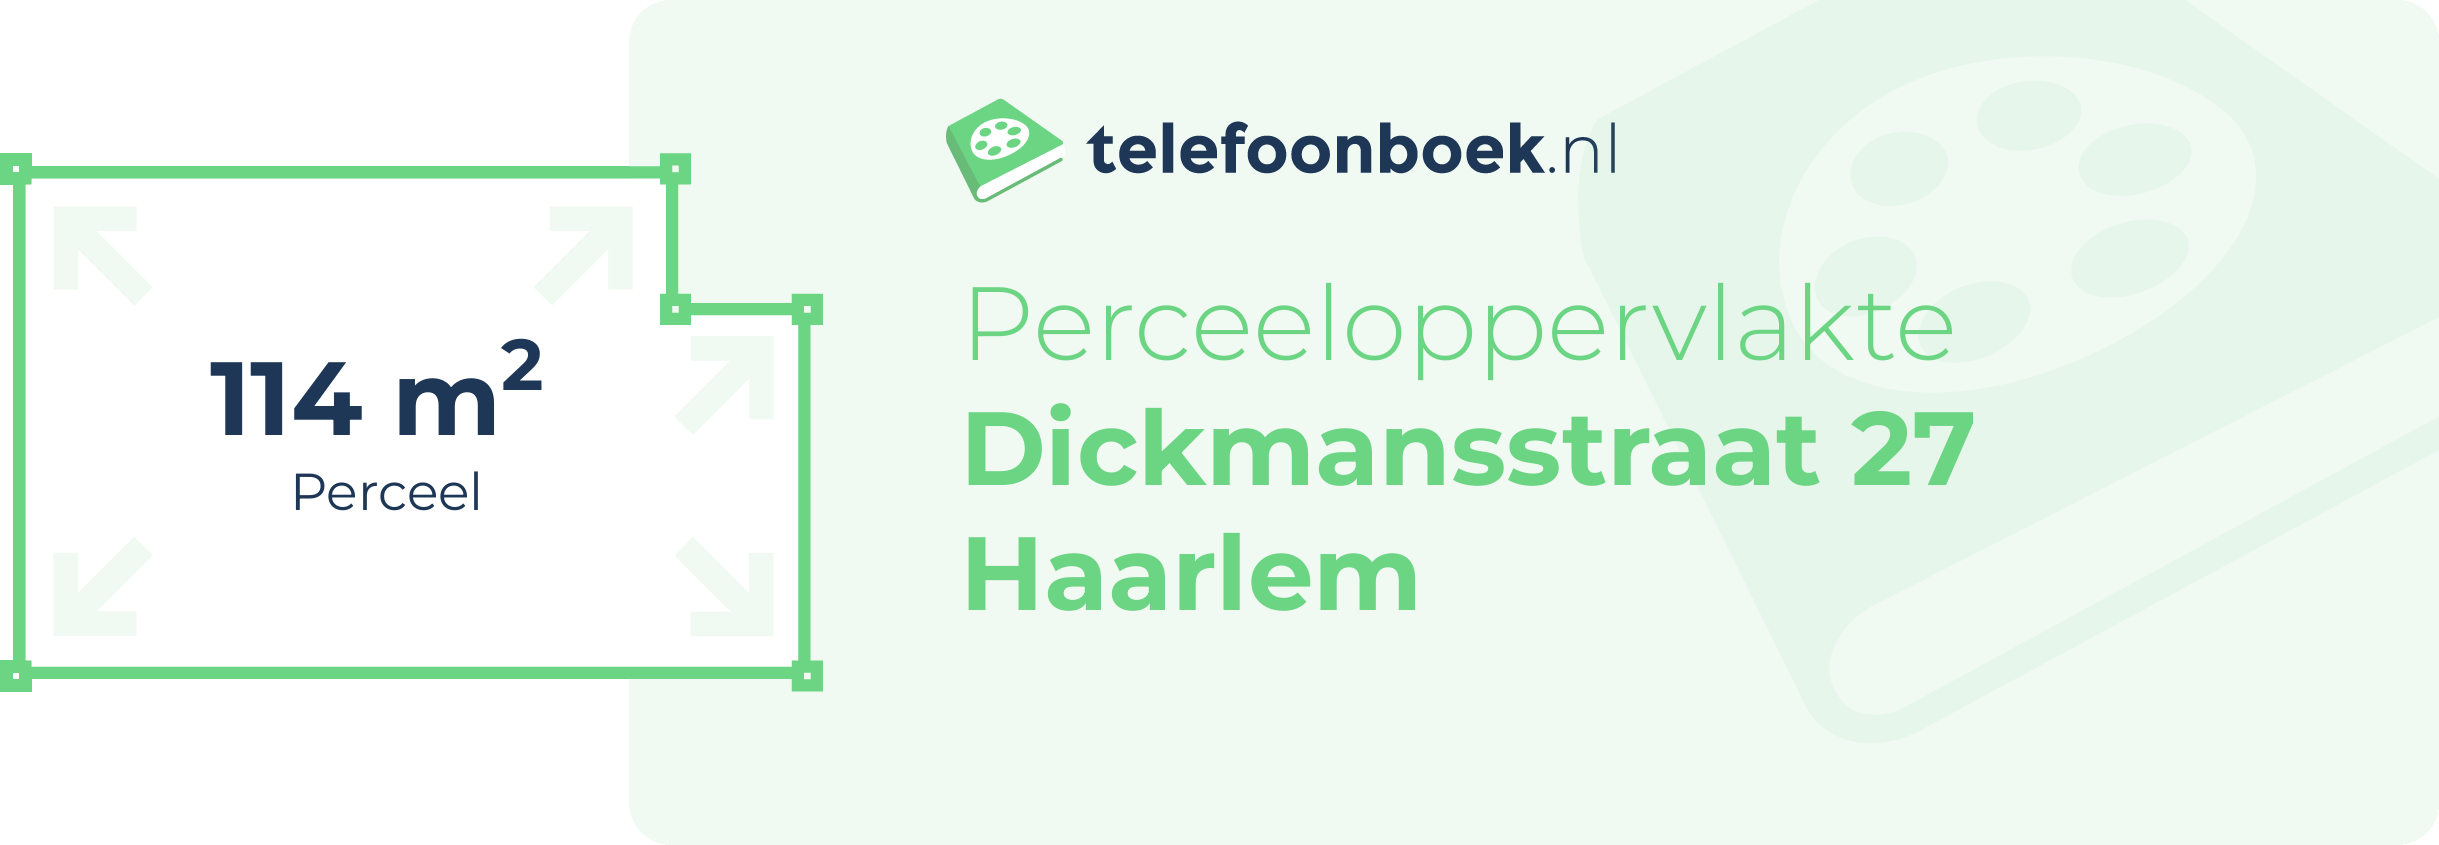 Perceeloppervlakte Dickmansstraat 27 Haarlem